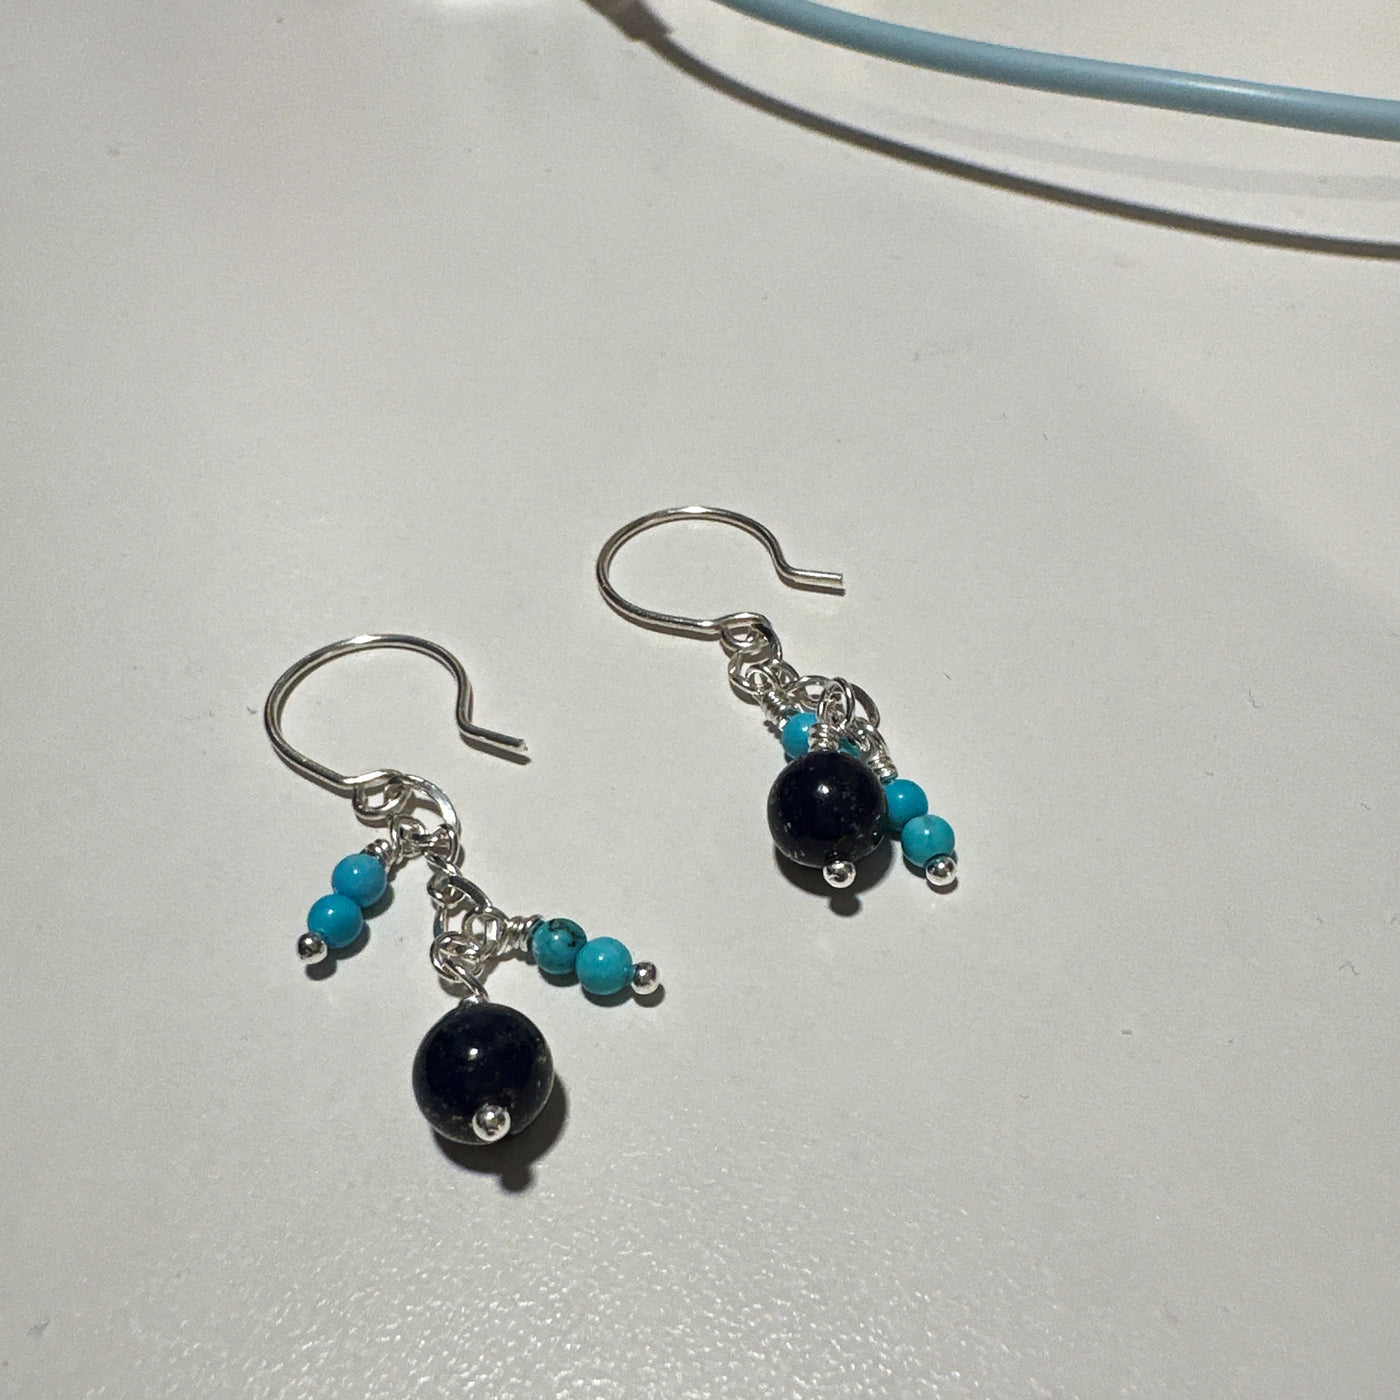 Tourquoise and lapislazzuli earrings